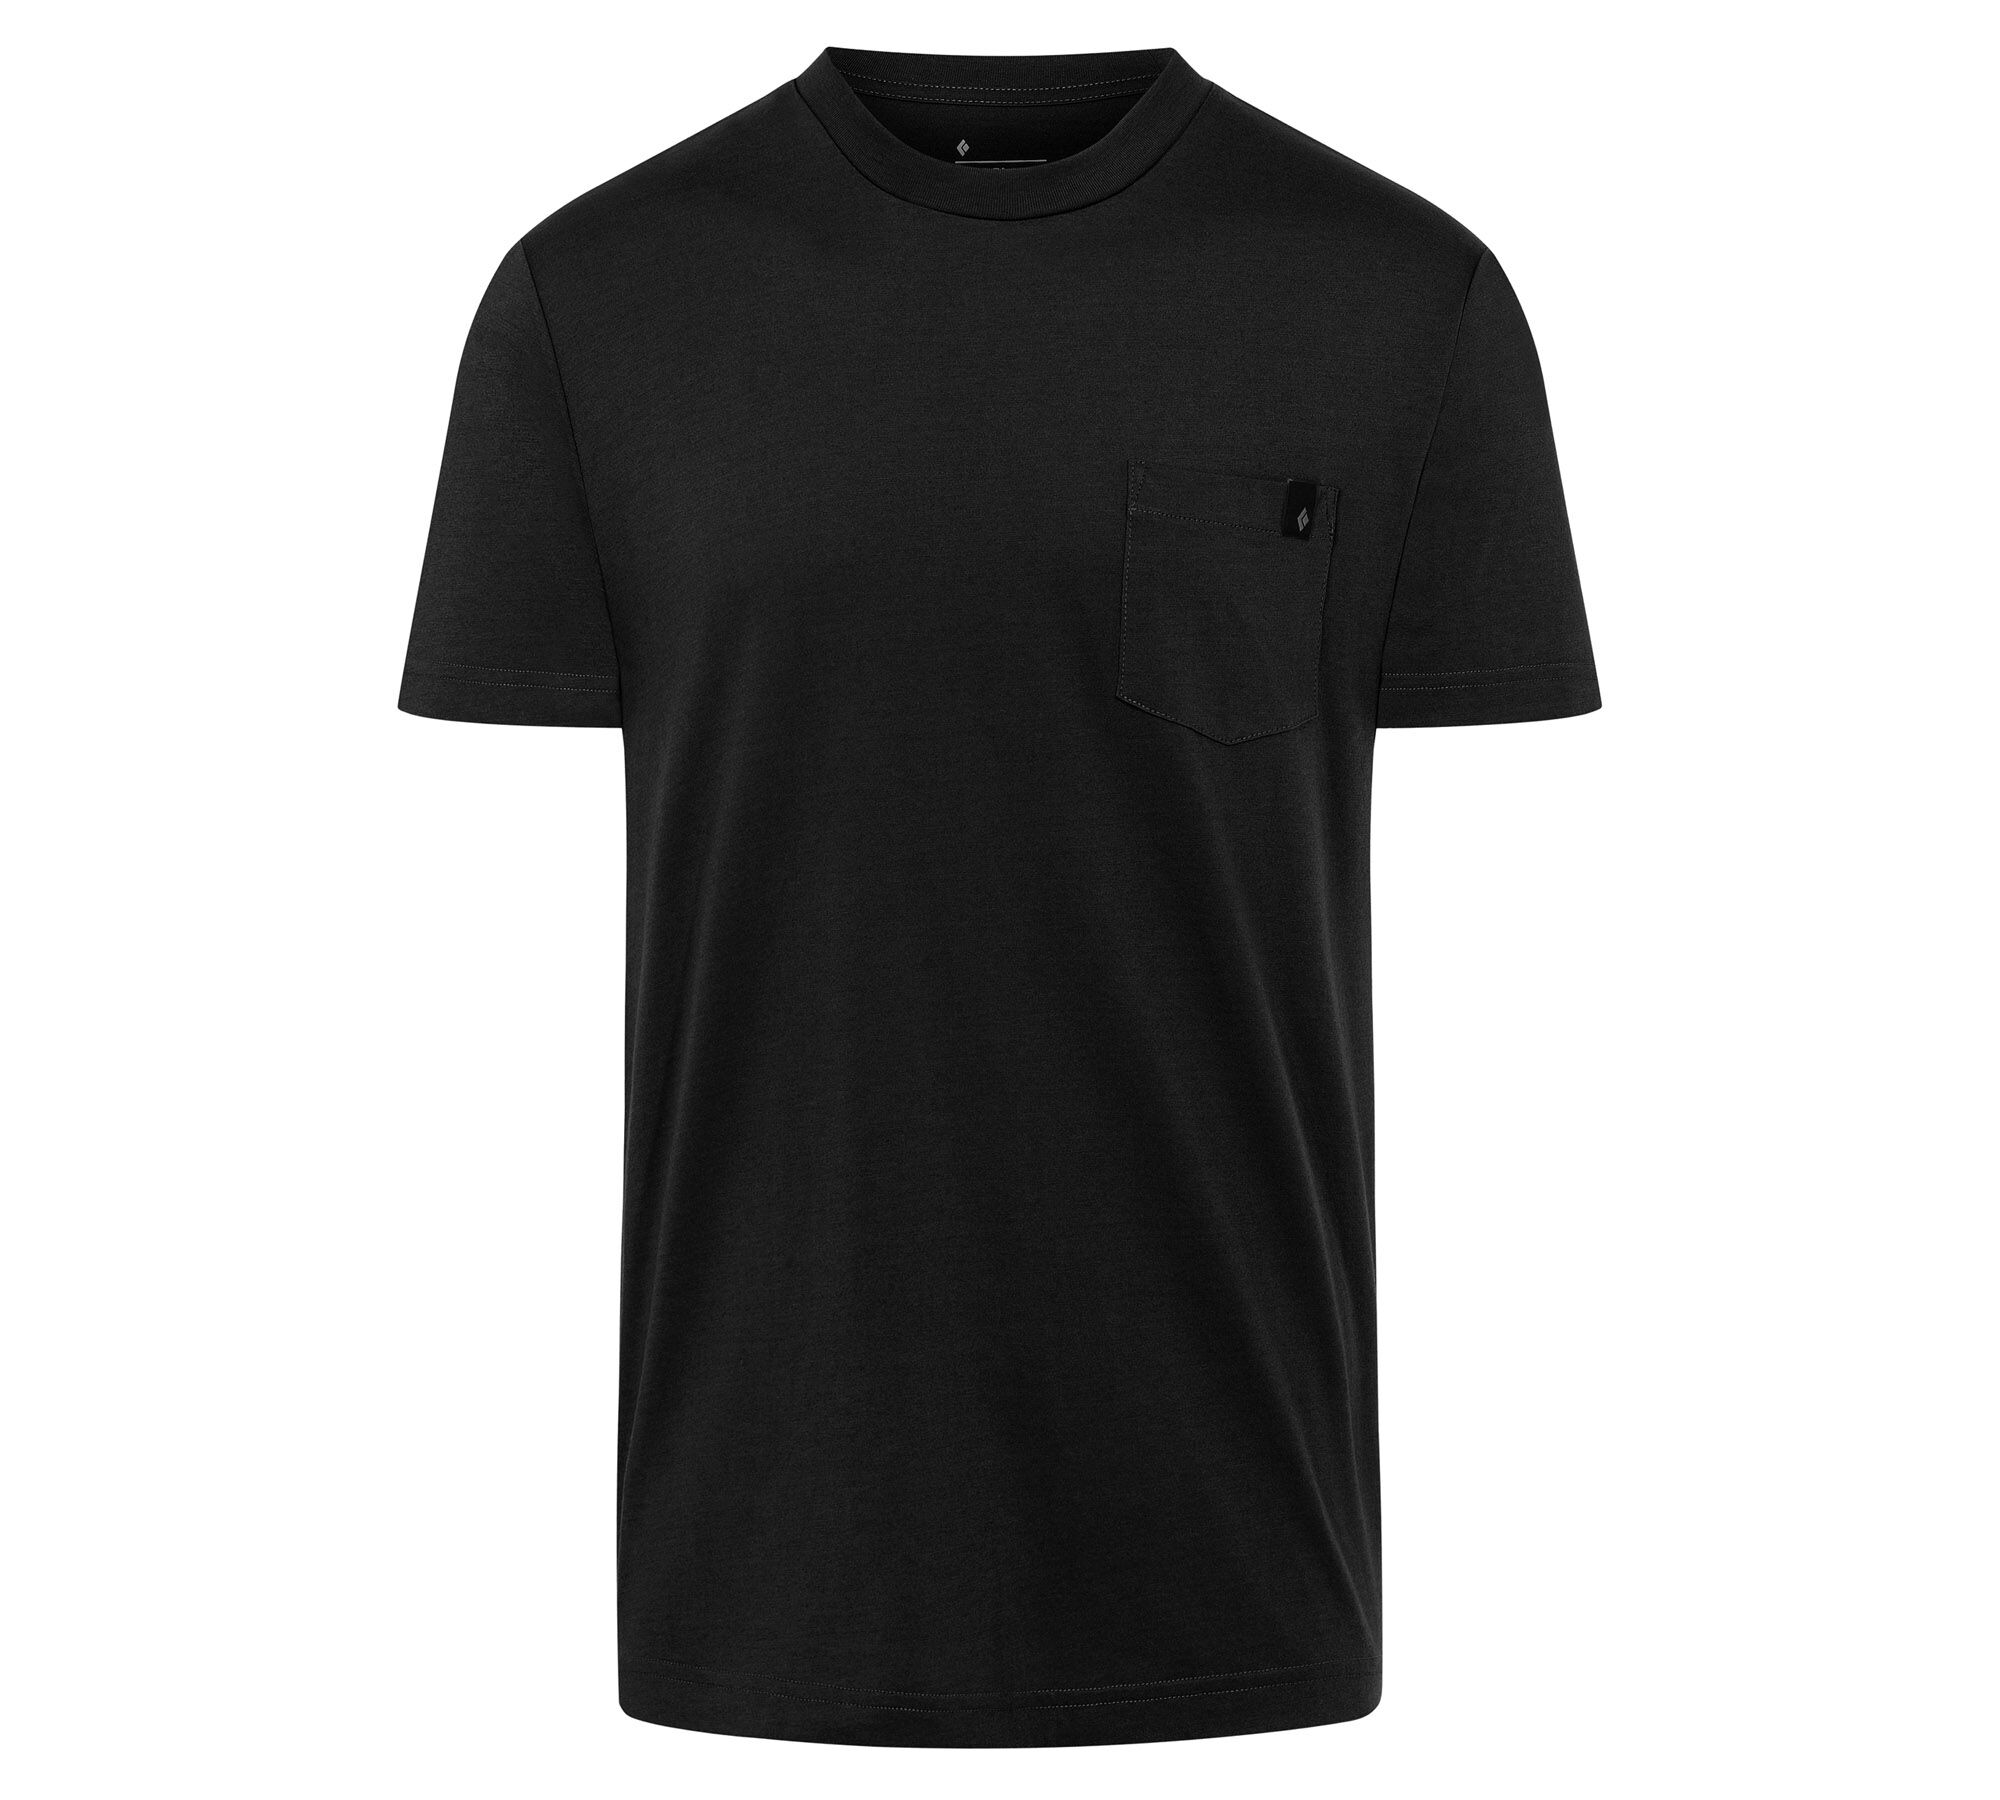 Black Diamond Crag Tee - T-shirt - Men's